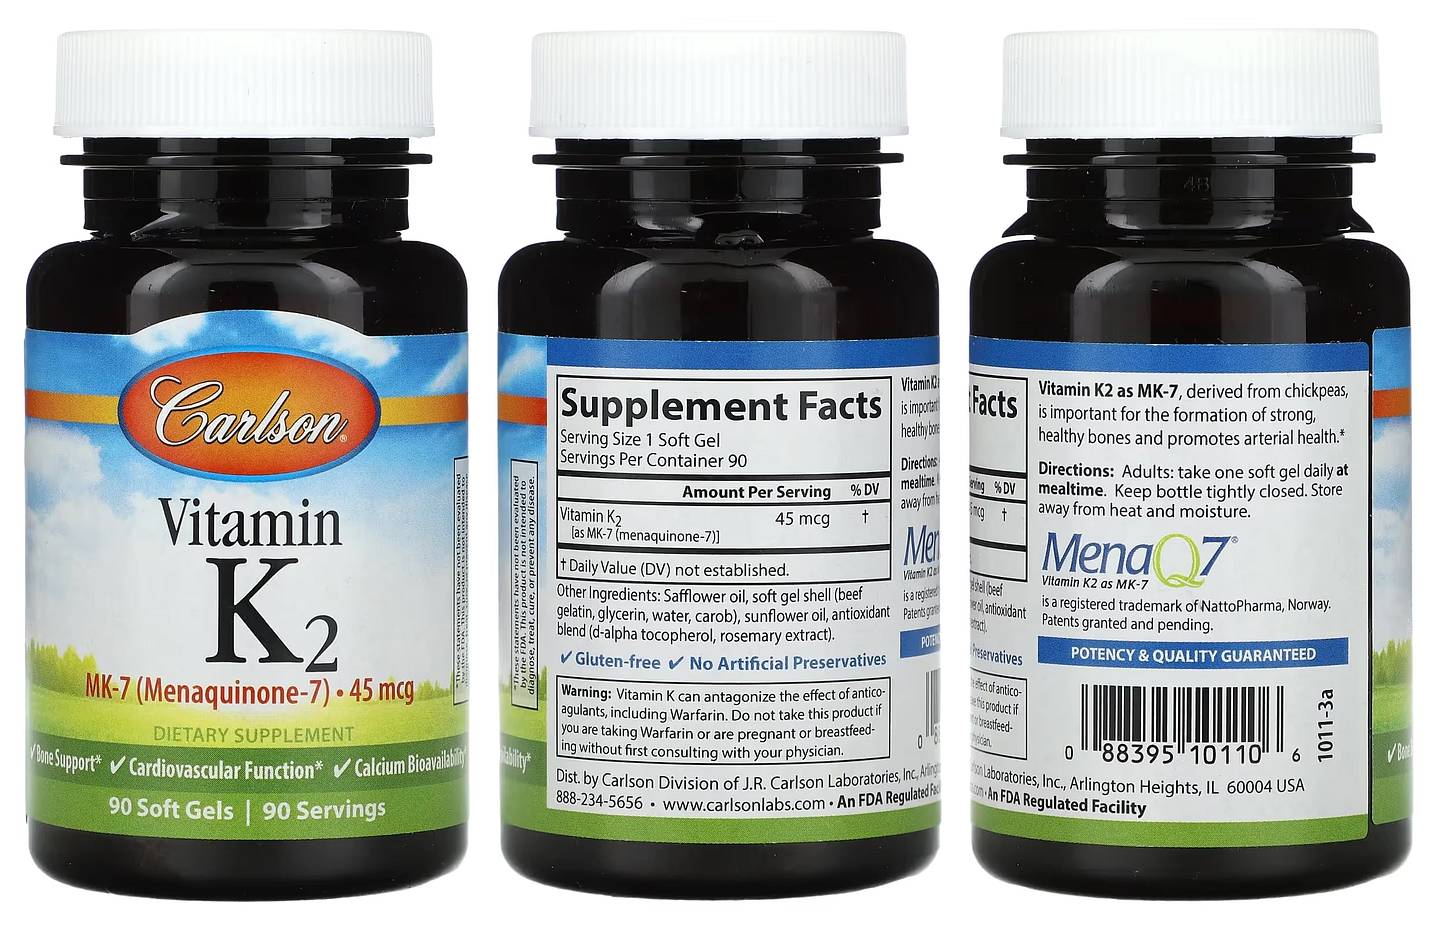 Carlson, Vitamin K2 packaging